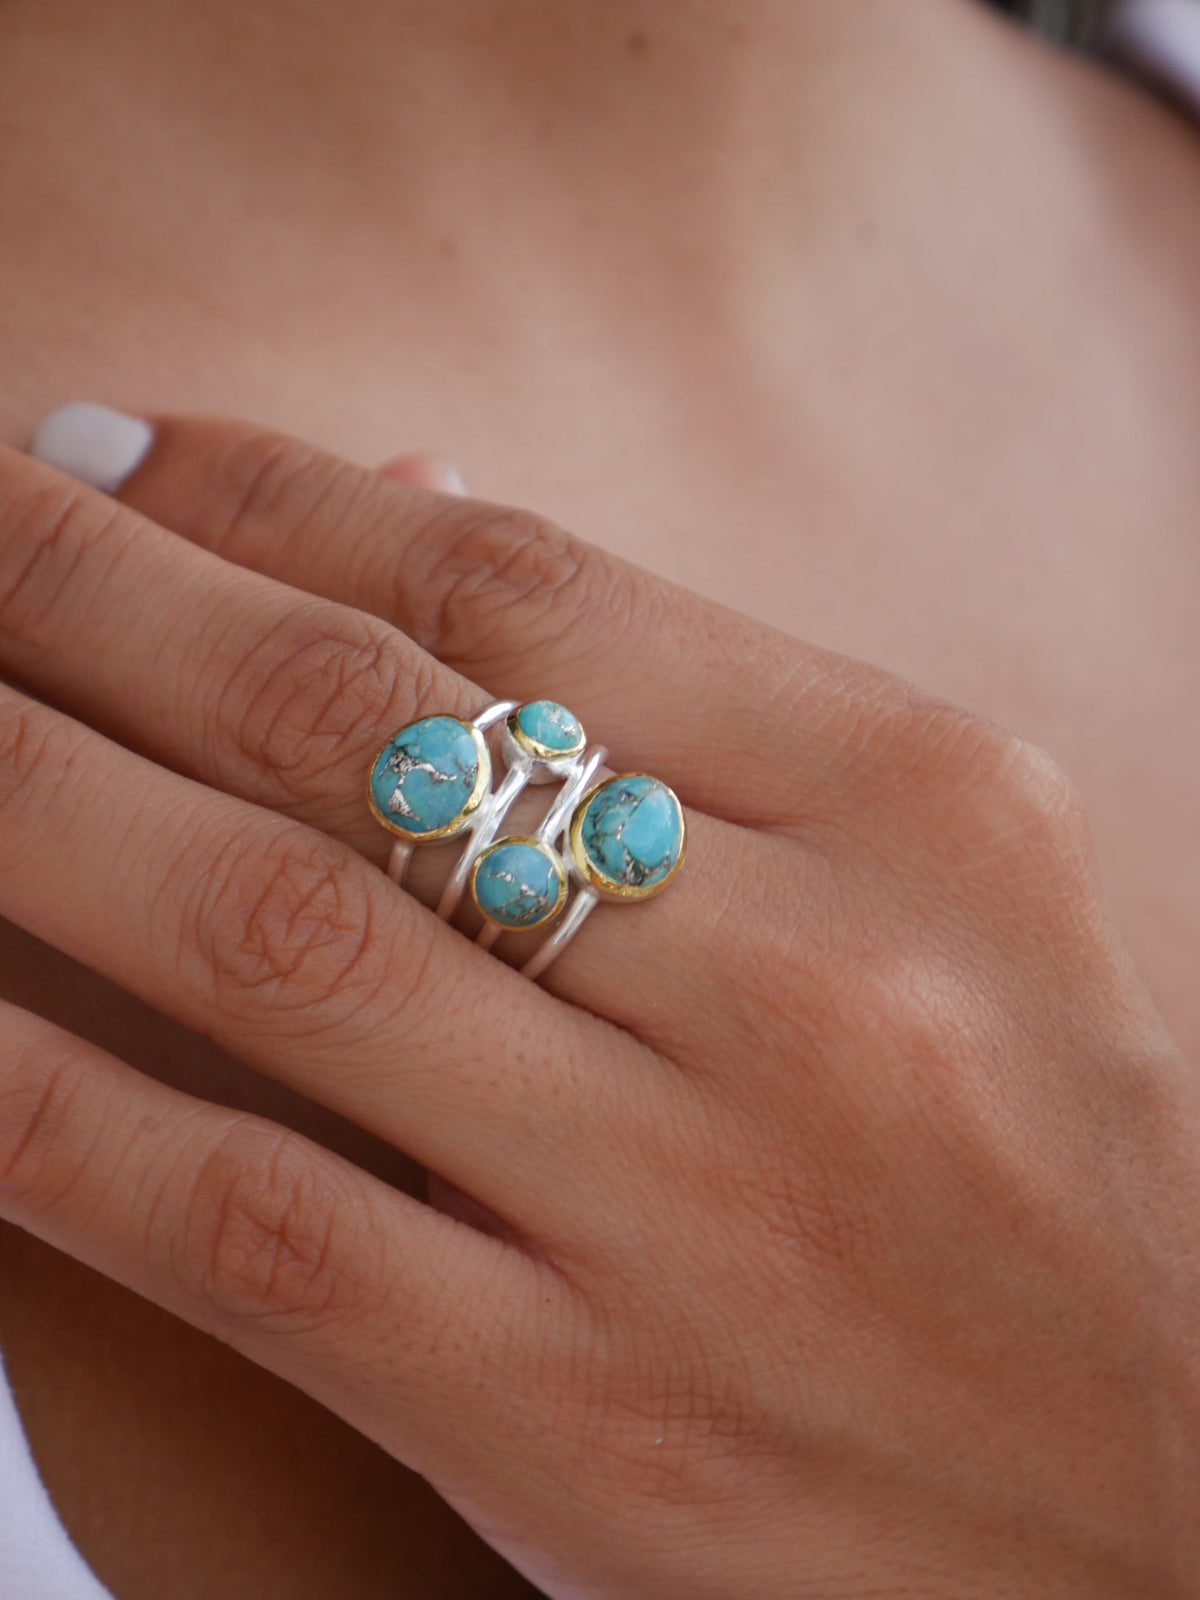 Rainbow Moonstone Ring,.925 Sterling Silver Natural Gemstone RIng, Golden Halo Orbit Goddess Ring, Nickel Free Hypoallergenic Statement Ring